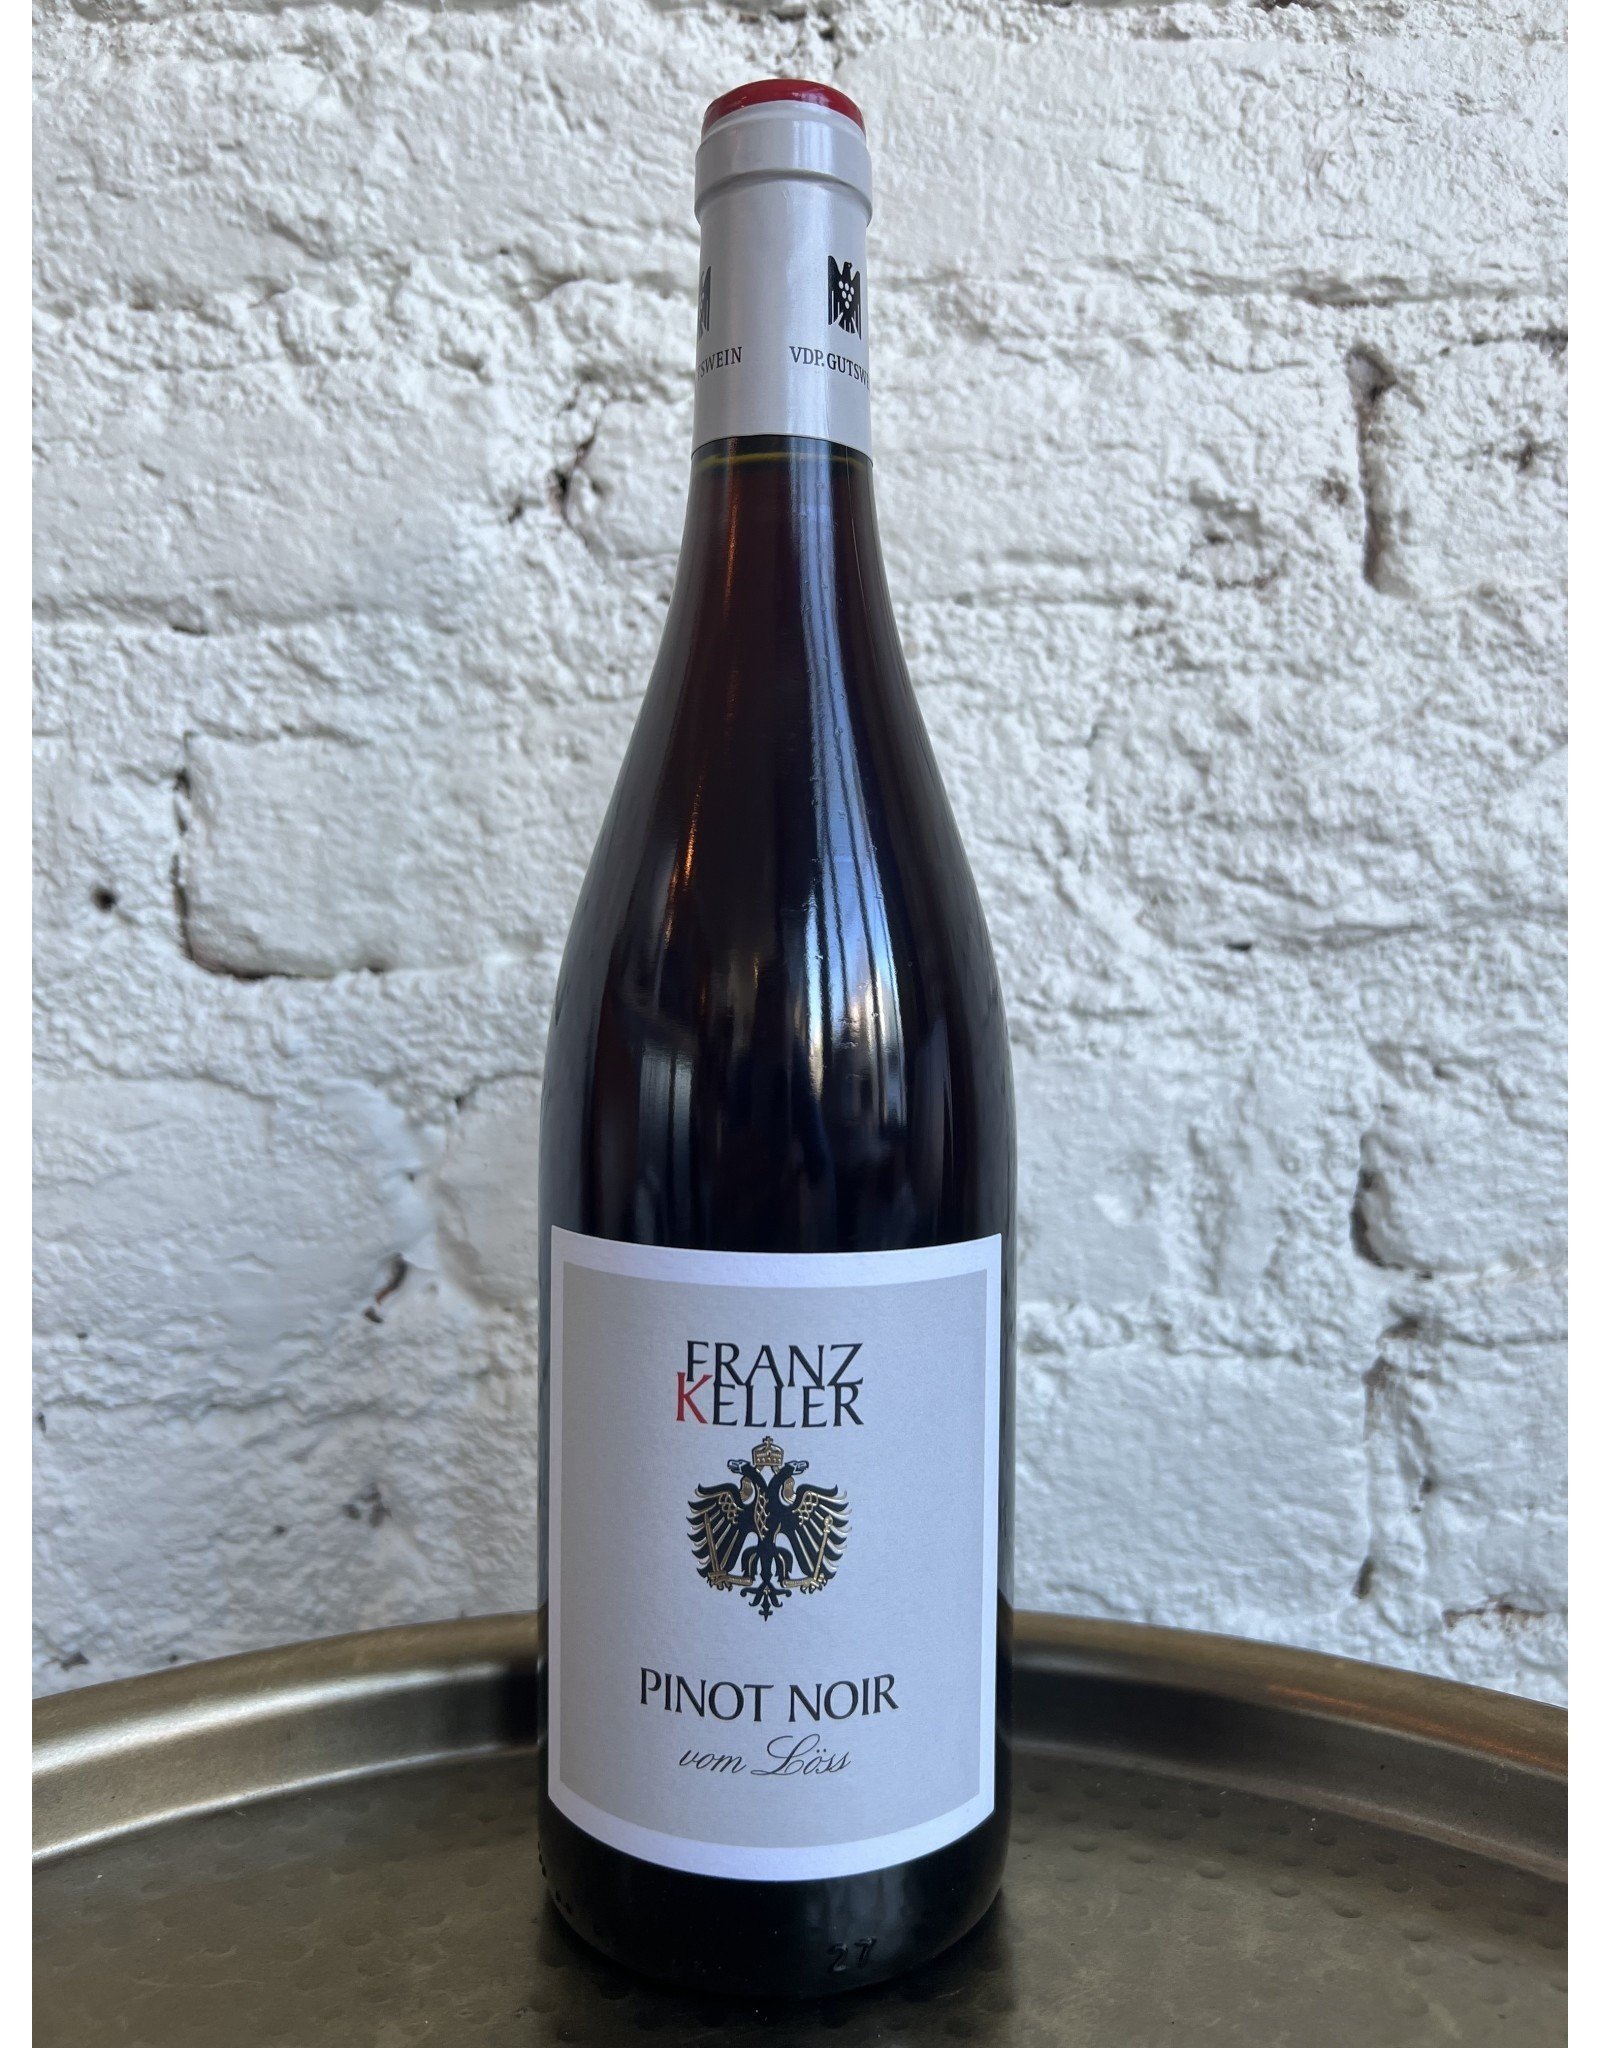 Pinot Noir, Keller Franz Bottle - Baden 2017 House